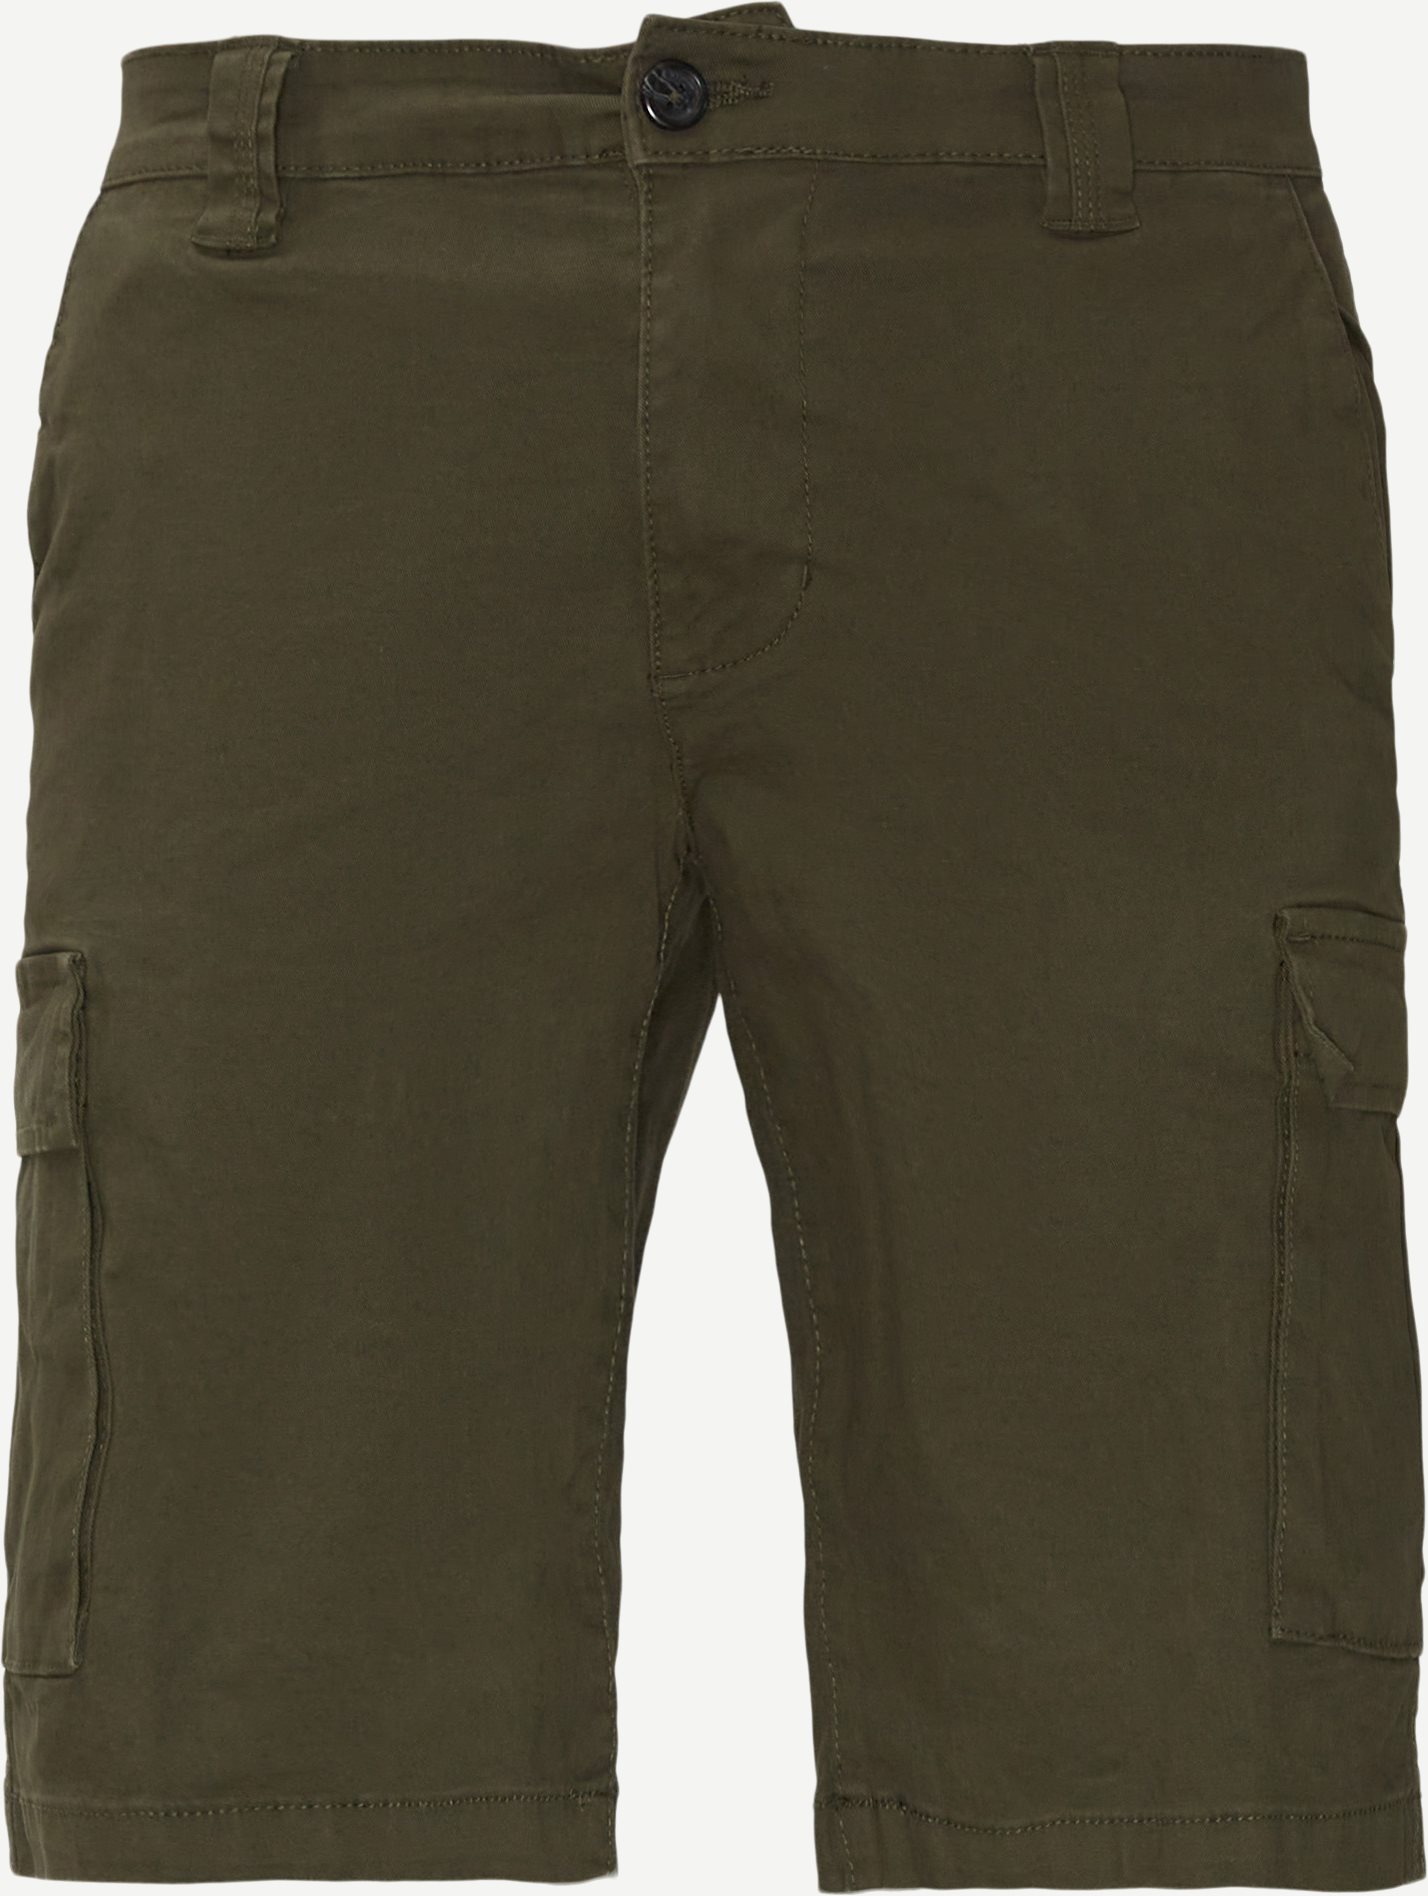 Zanzibar Cargo Shorts - Shorts - Regular fit - Army